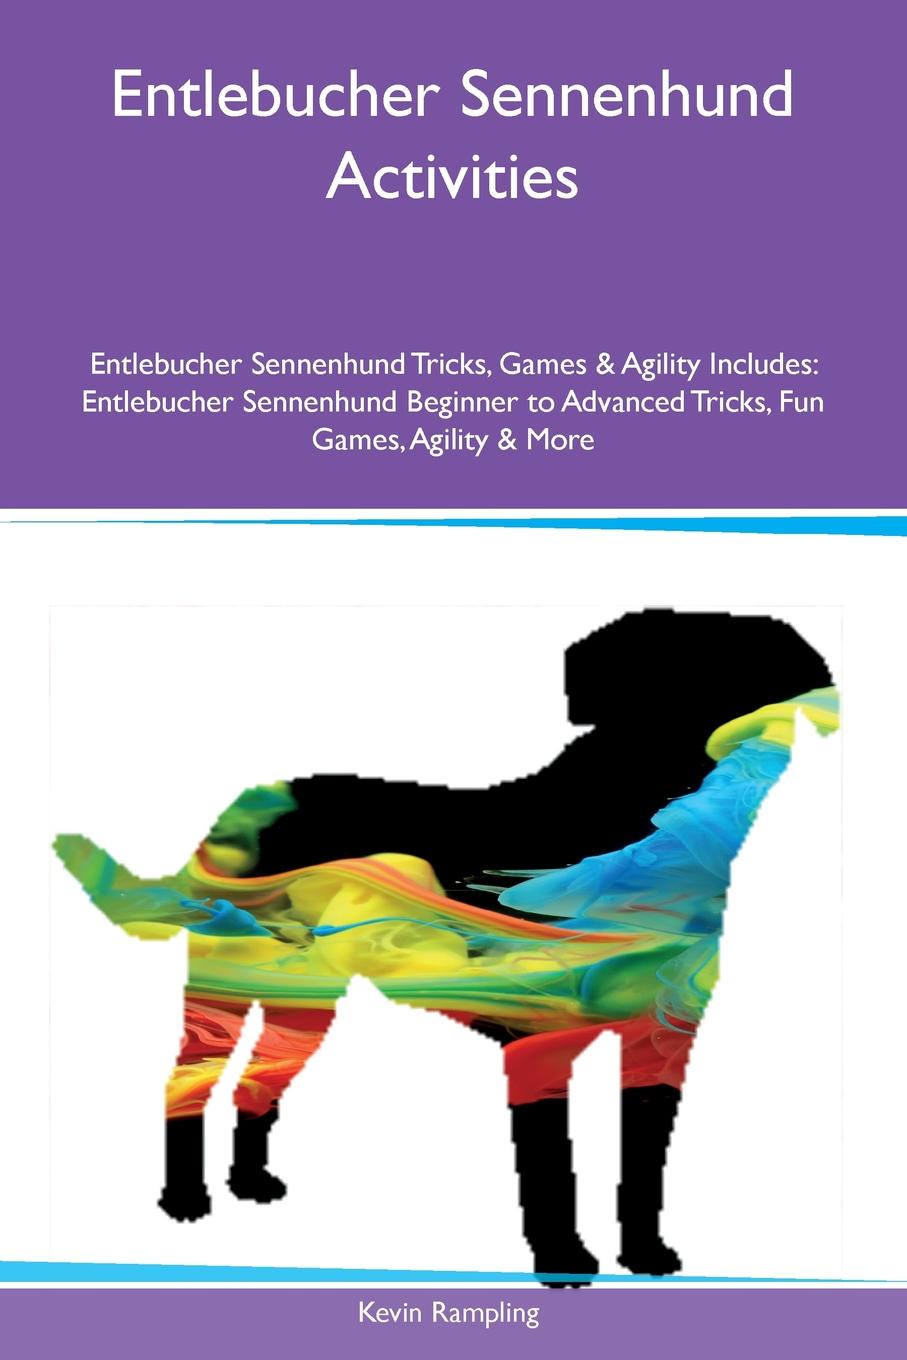 Entlebucher Sennenhund Activities Entlebucher Sennenhund Tricks, Games & Agility Includes. Entlebucher Sennenhund Beginner to Advanced Tricks, Fun Games, Agility & More